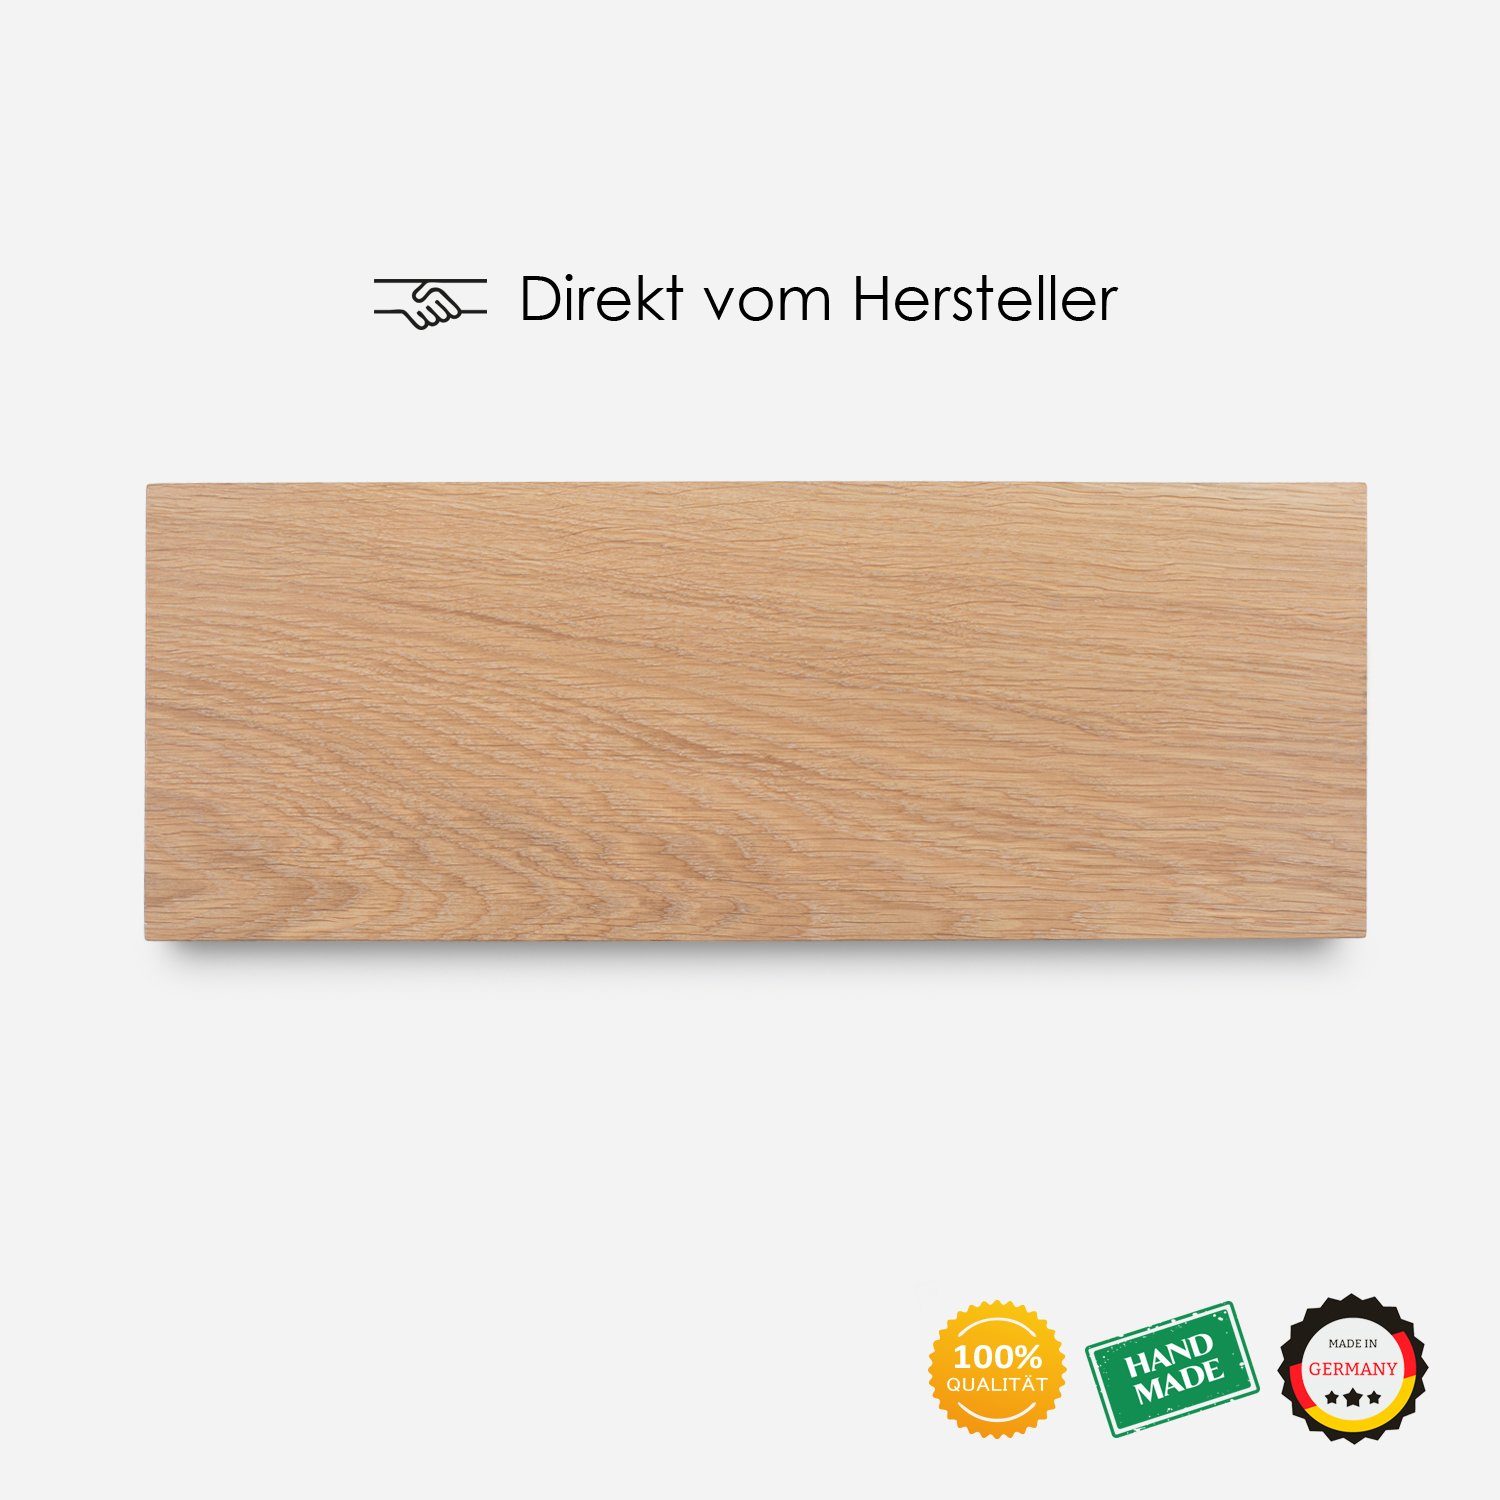 Handgefertigtes Germany Regal Wandregal - in HOLY, Eiche Natur massiv Made Rikmani Holz